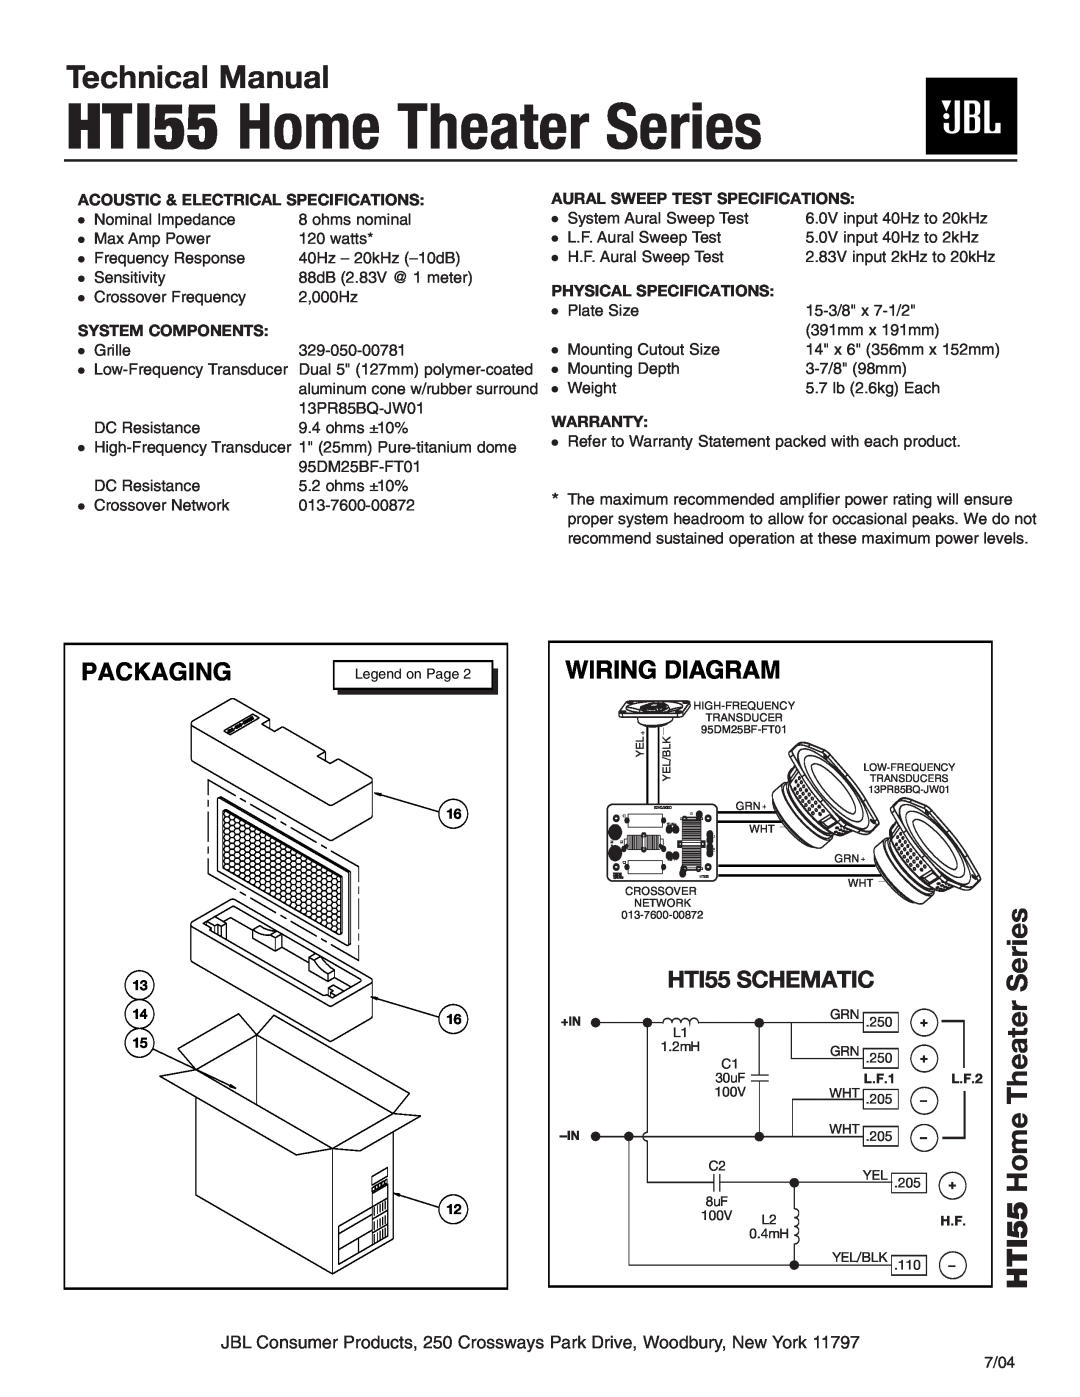 JBL MRK-300ST-BK technical manual HTI55 Home Theater Series, Technical Manual, Packaging, HTI55 SCHEMATIC 